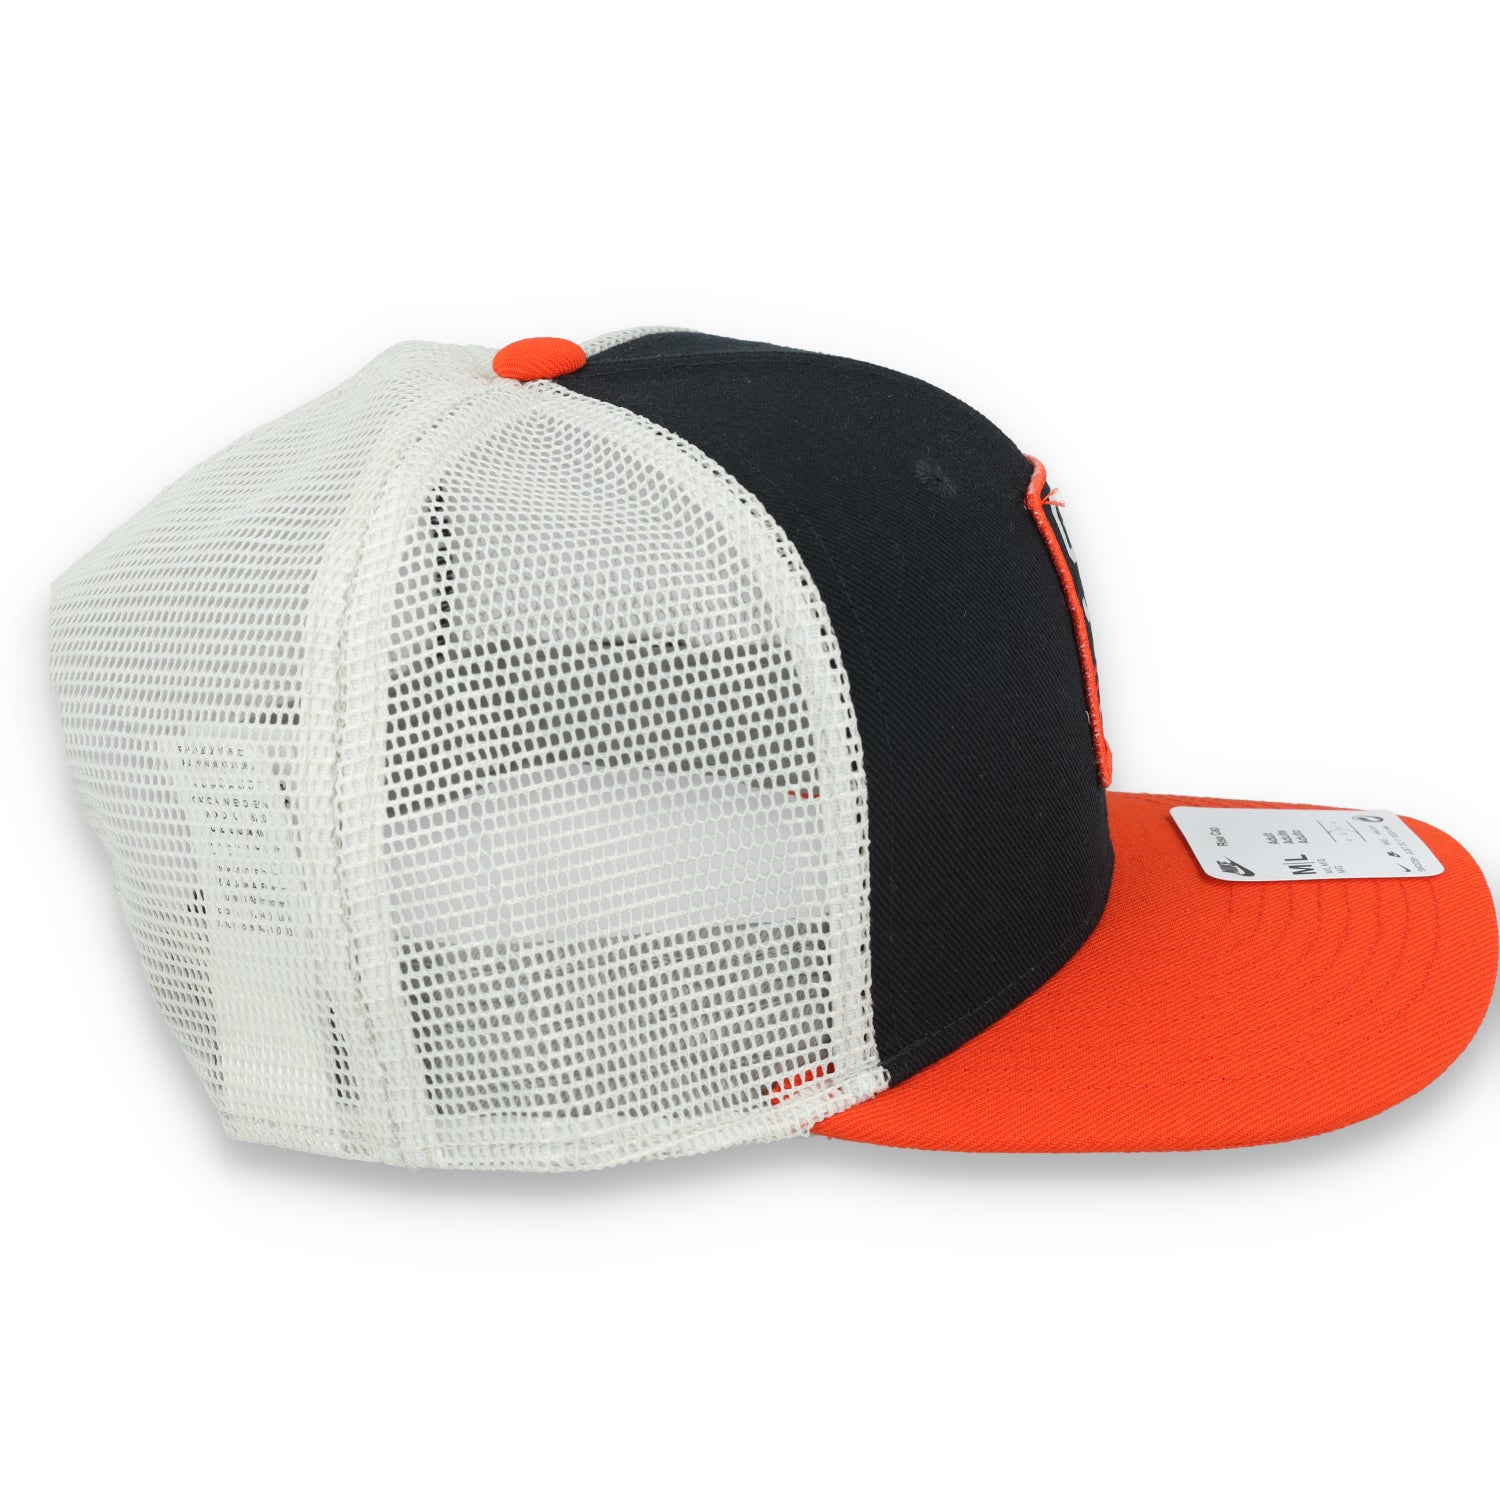 Nike San Francisco Giants Club Primetime Snapback Hat